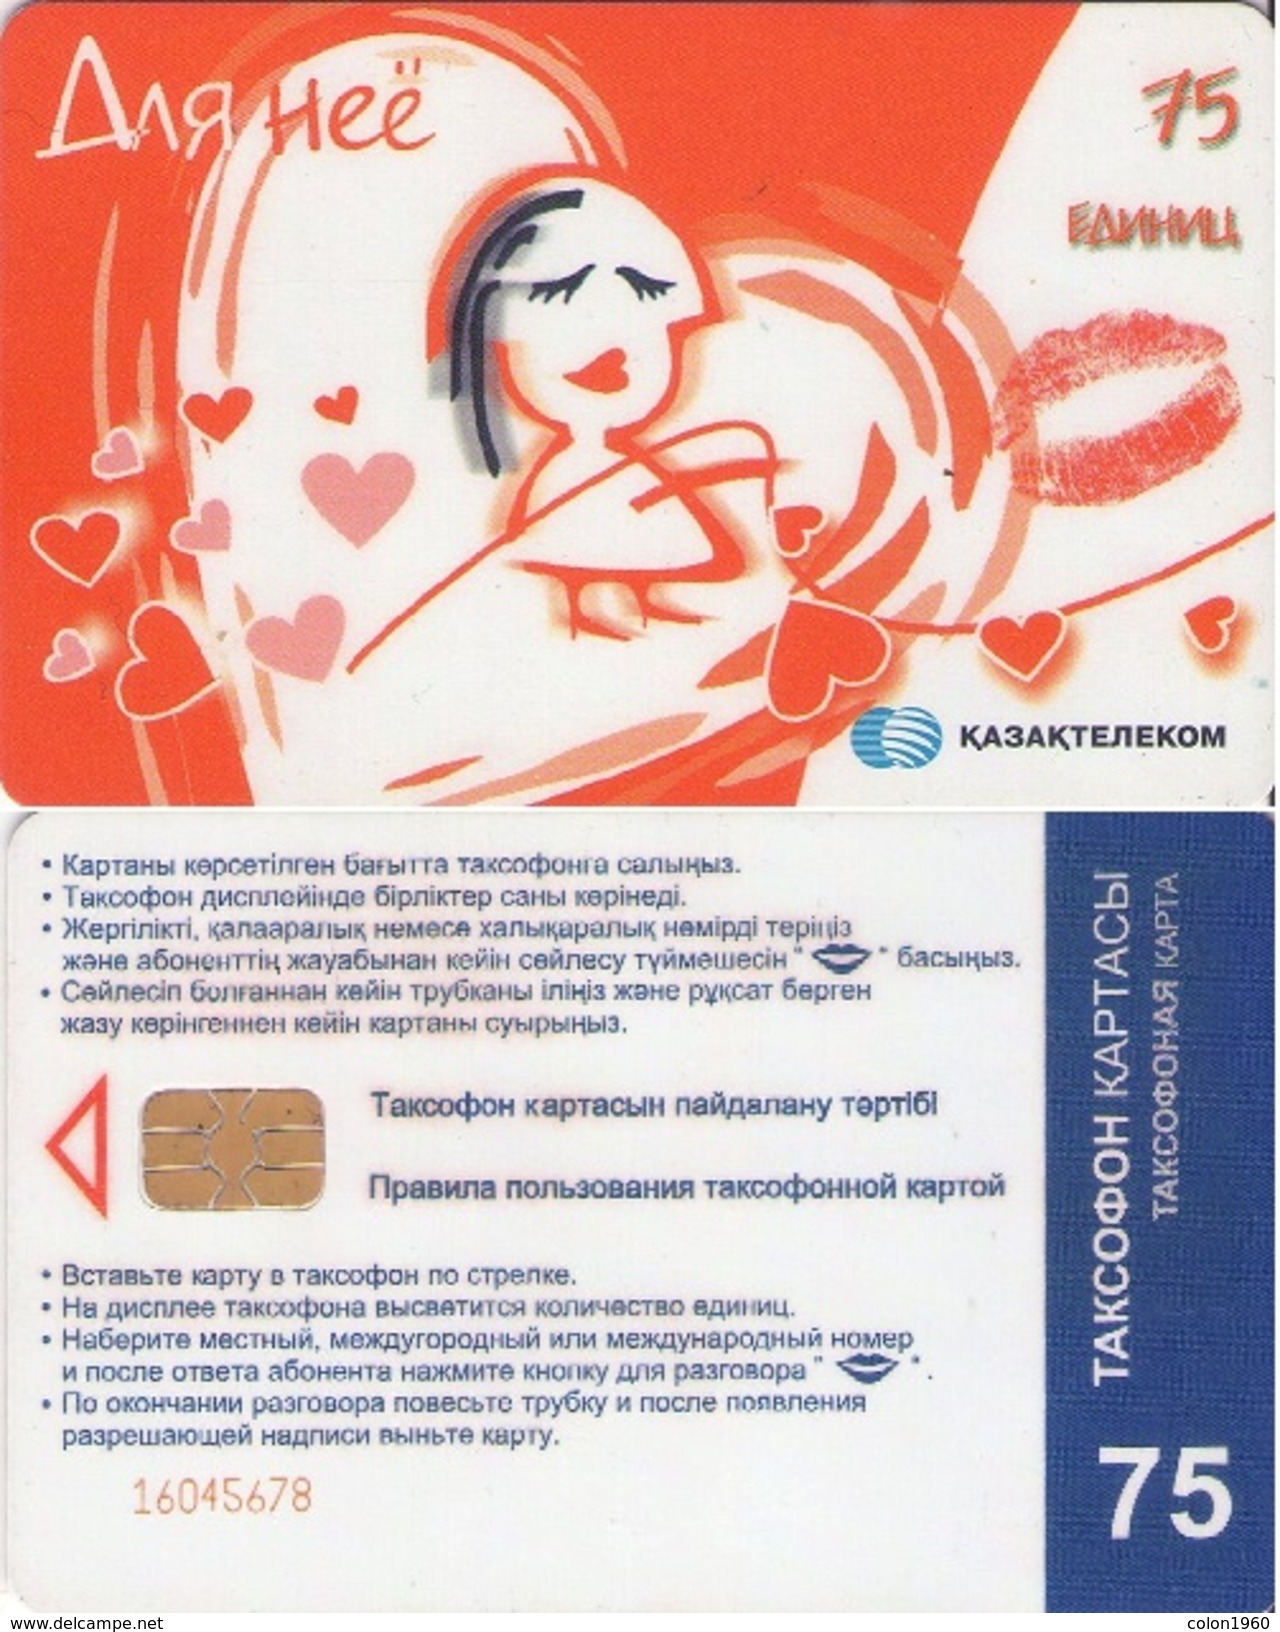 KAZAJSTAN. KZ-KZT-0014. FOR HER LOVE. 75U. 2004. (007) - Kasachstan